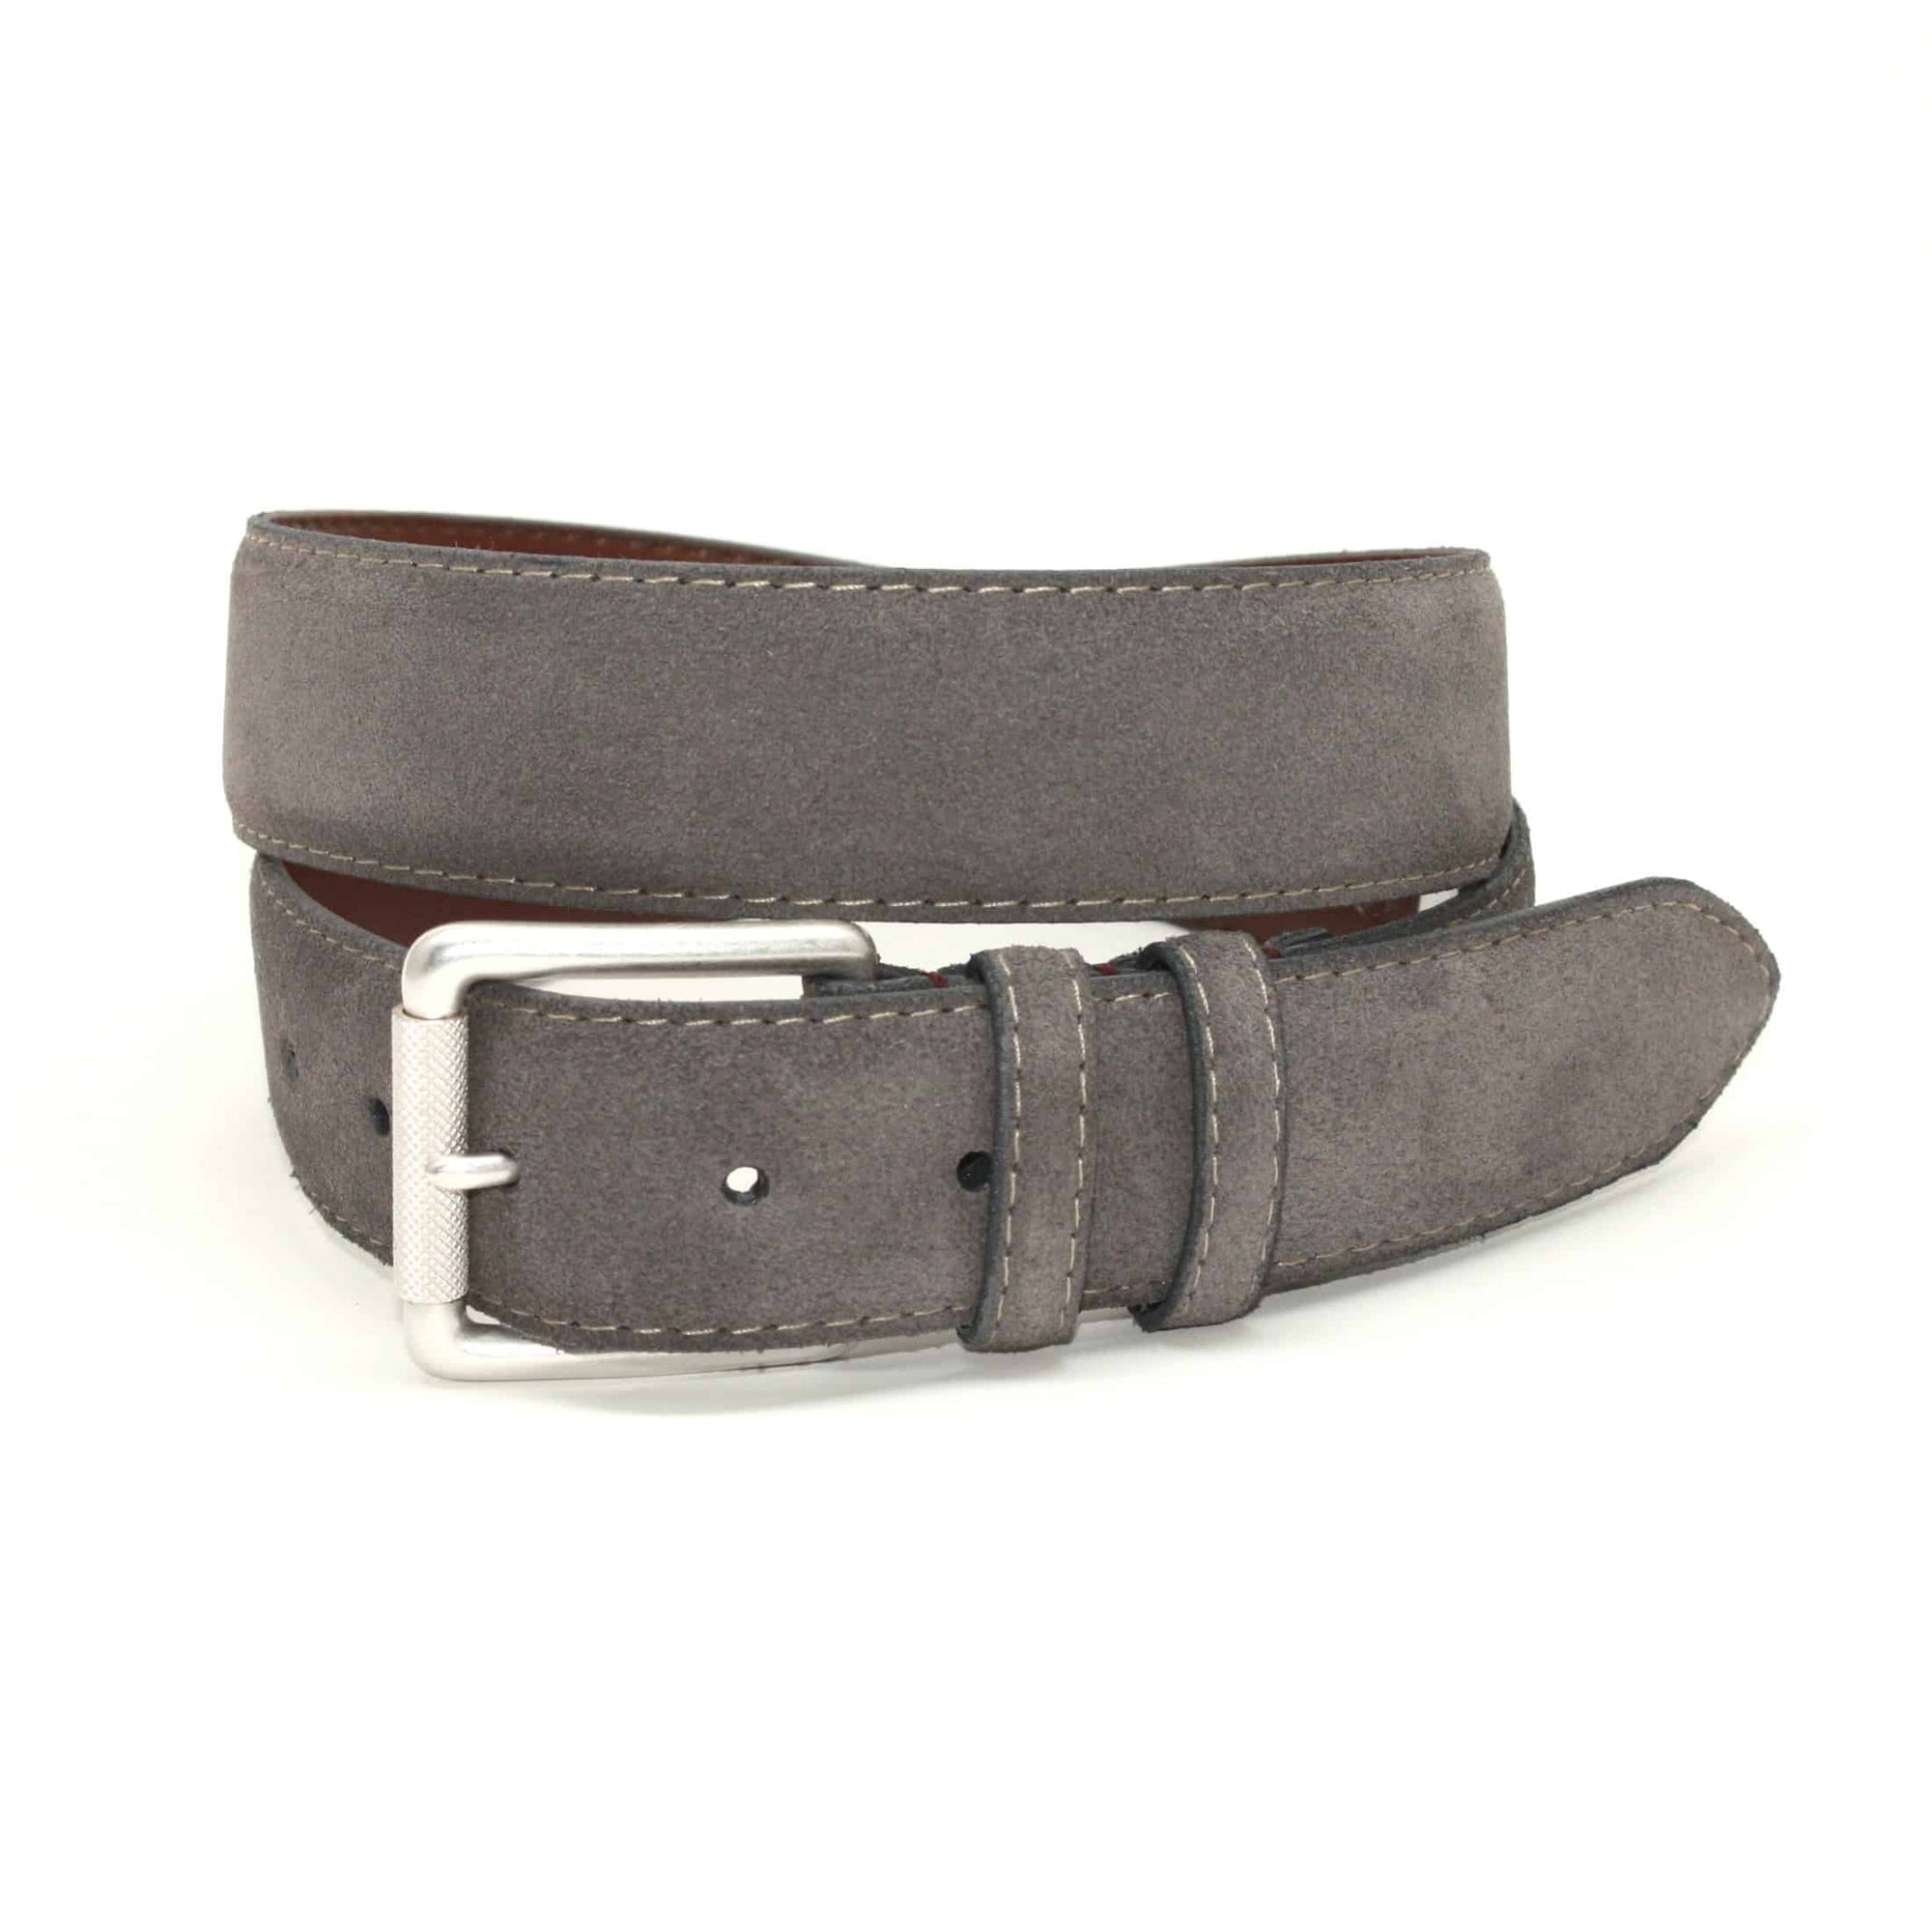 European Sueded Calfskin Belt in Slate Grey by Torino Leather